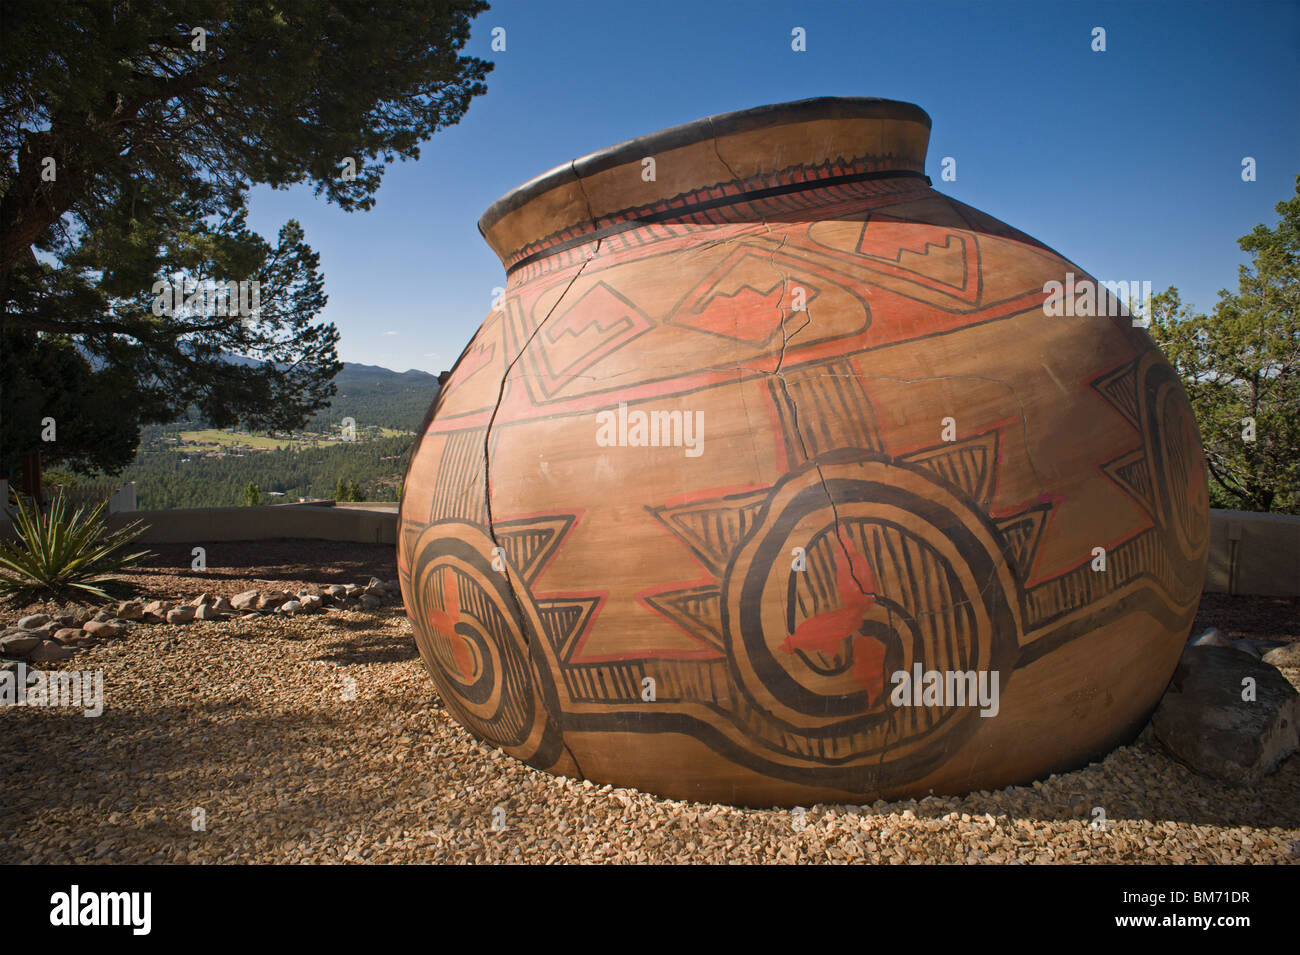 Eine riesige Fiberglas-Skulptur, Keramik-Keramik-Kunstwerke des amerikanischen Südwestens, mit Blick auf Ruidoso, New Mexico. Stockfoto